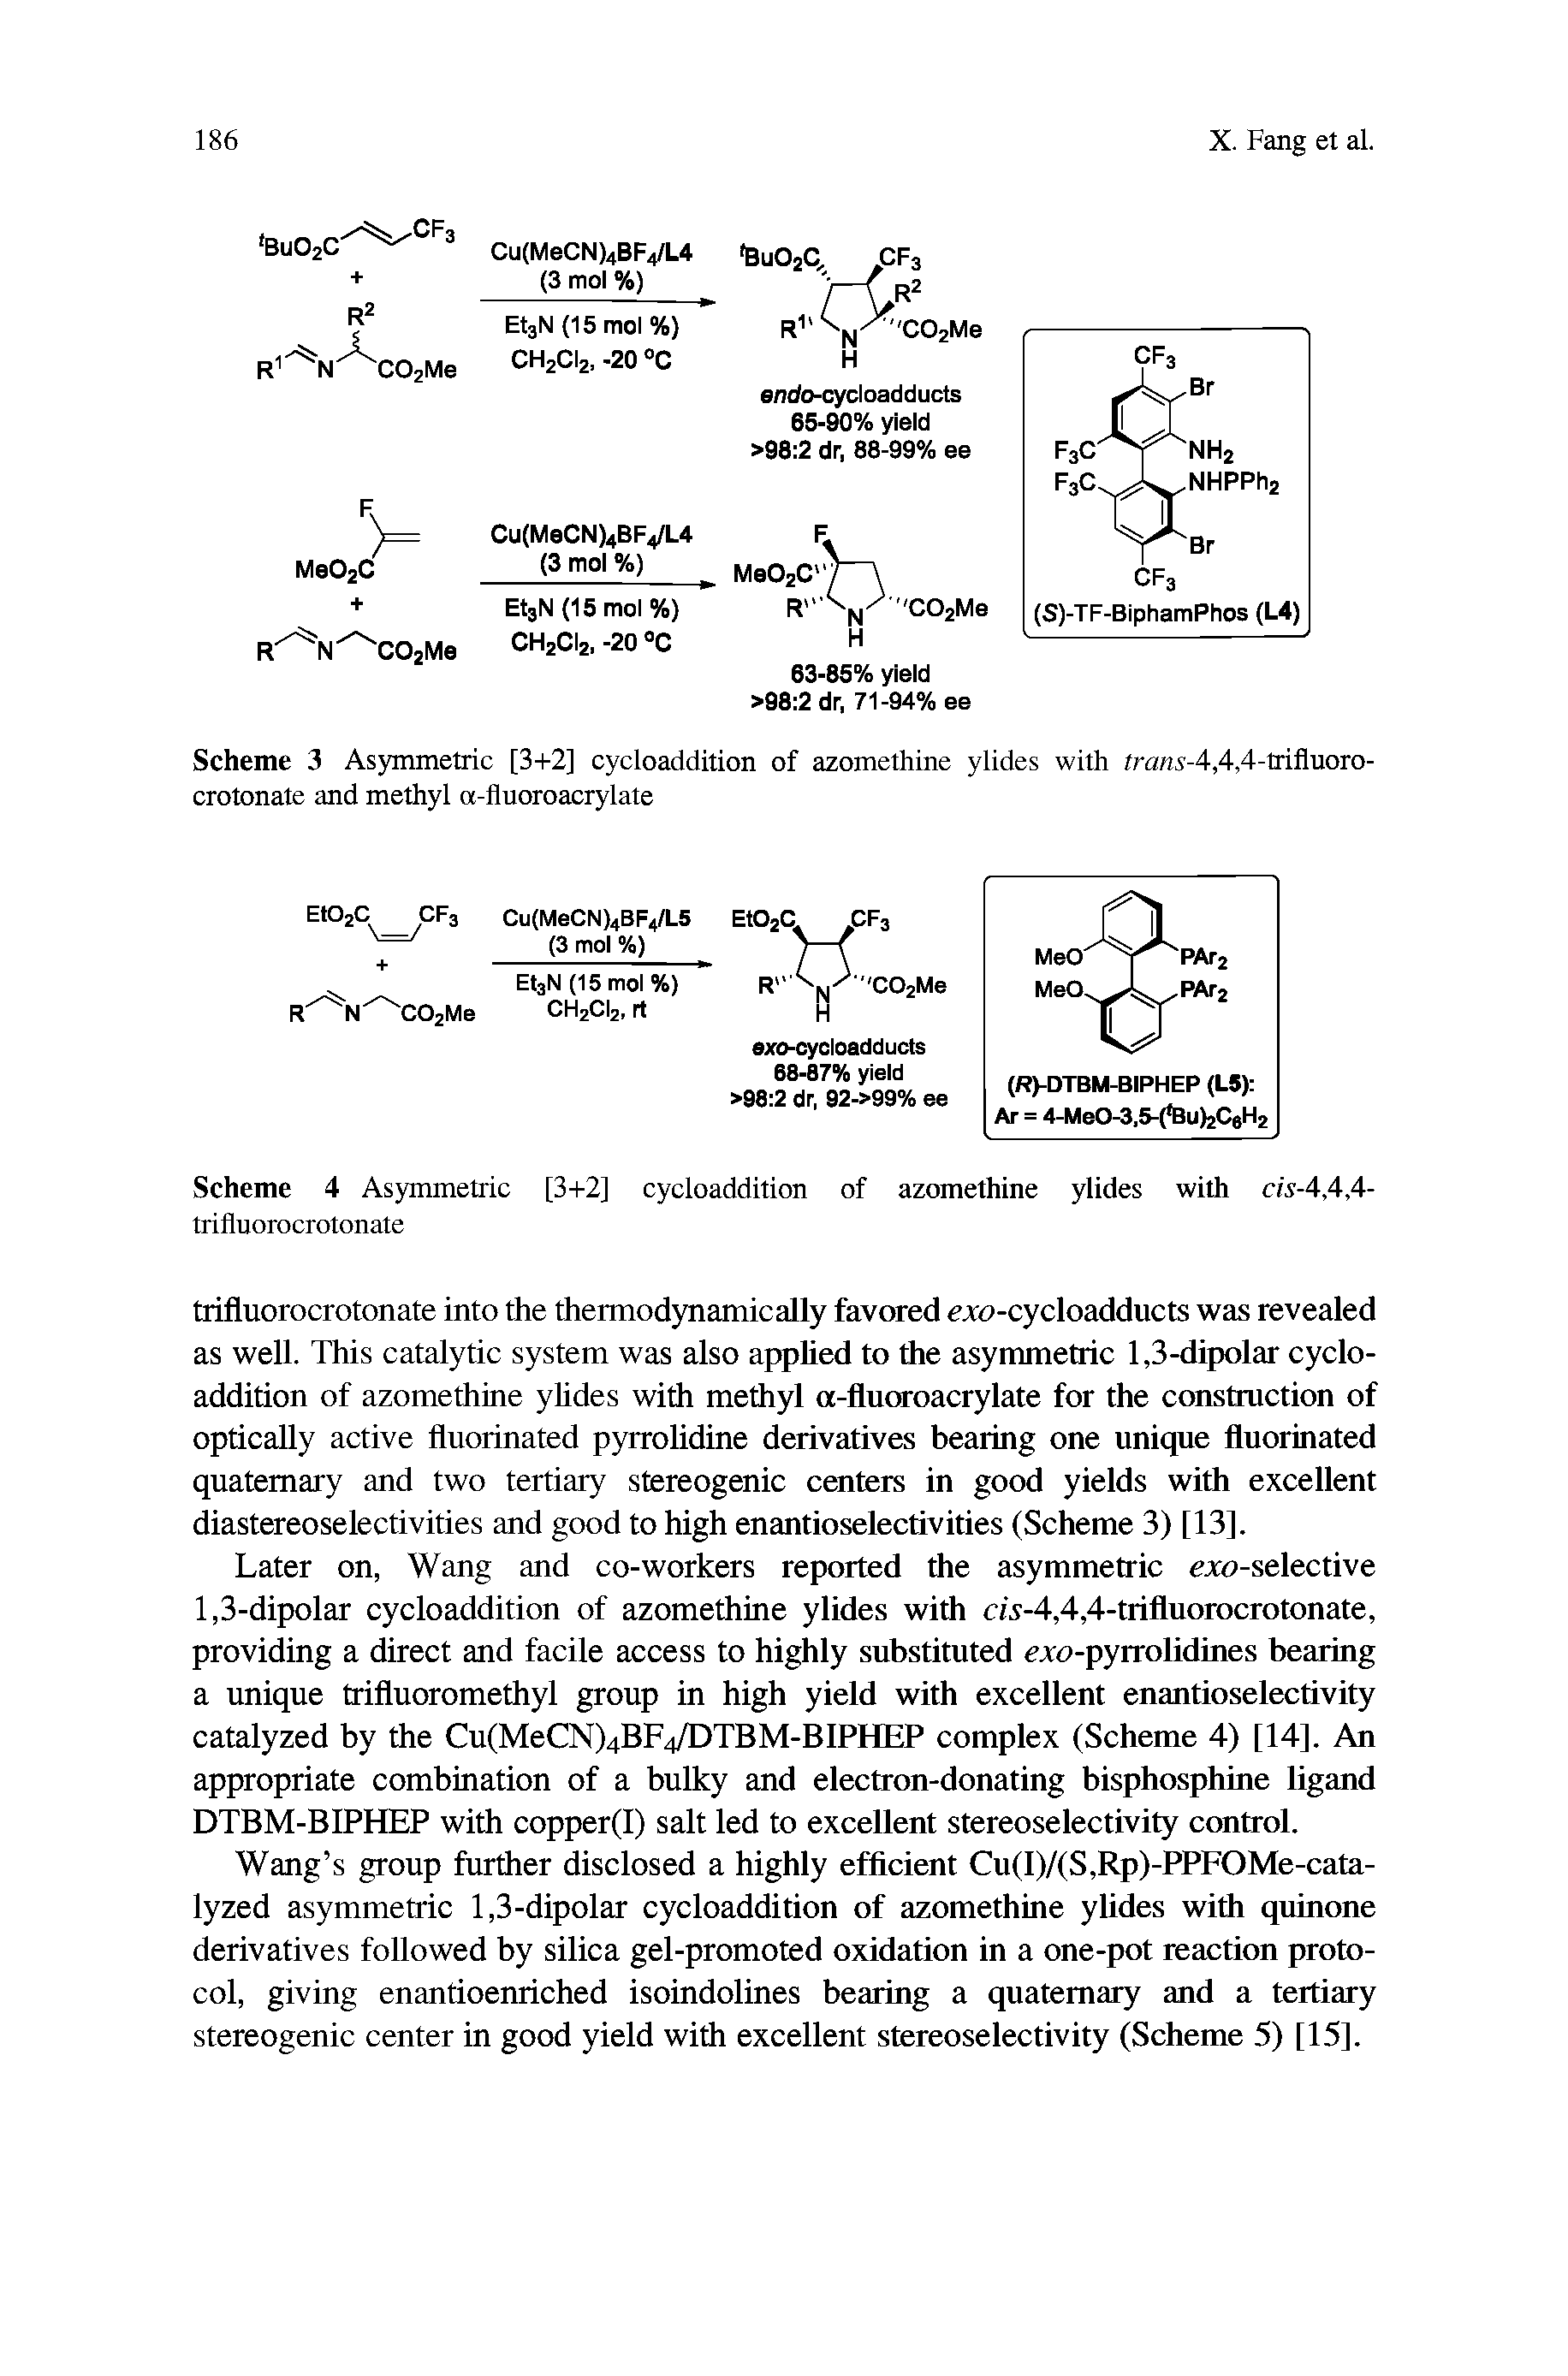 Scheme 3 Asymmetric [3-1-2] cycloaddition of azomethine ylides with trani-4,4,4-trifluoro-crotonate and methyl a-fluoroacrylate...